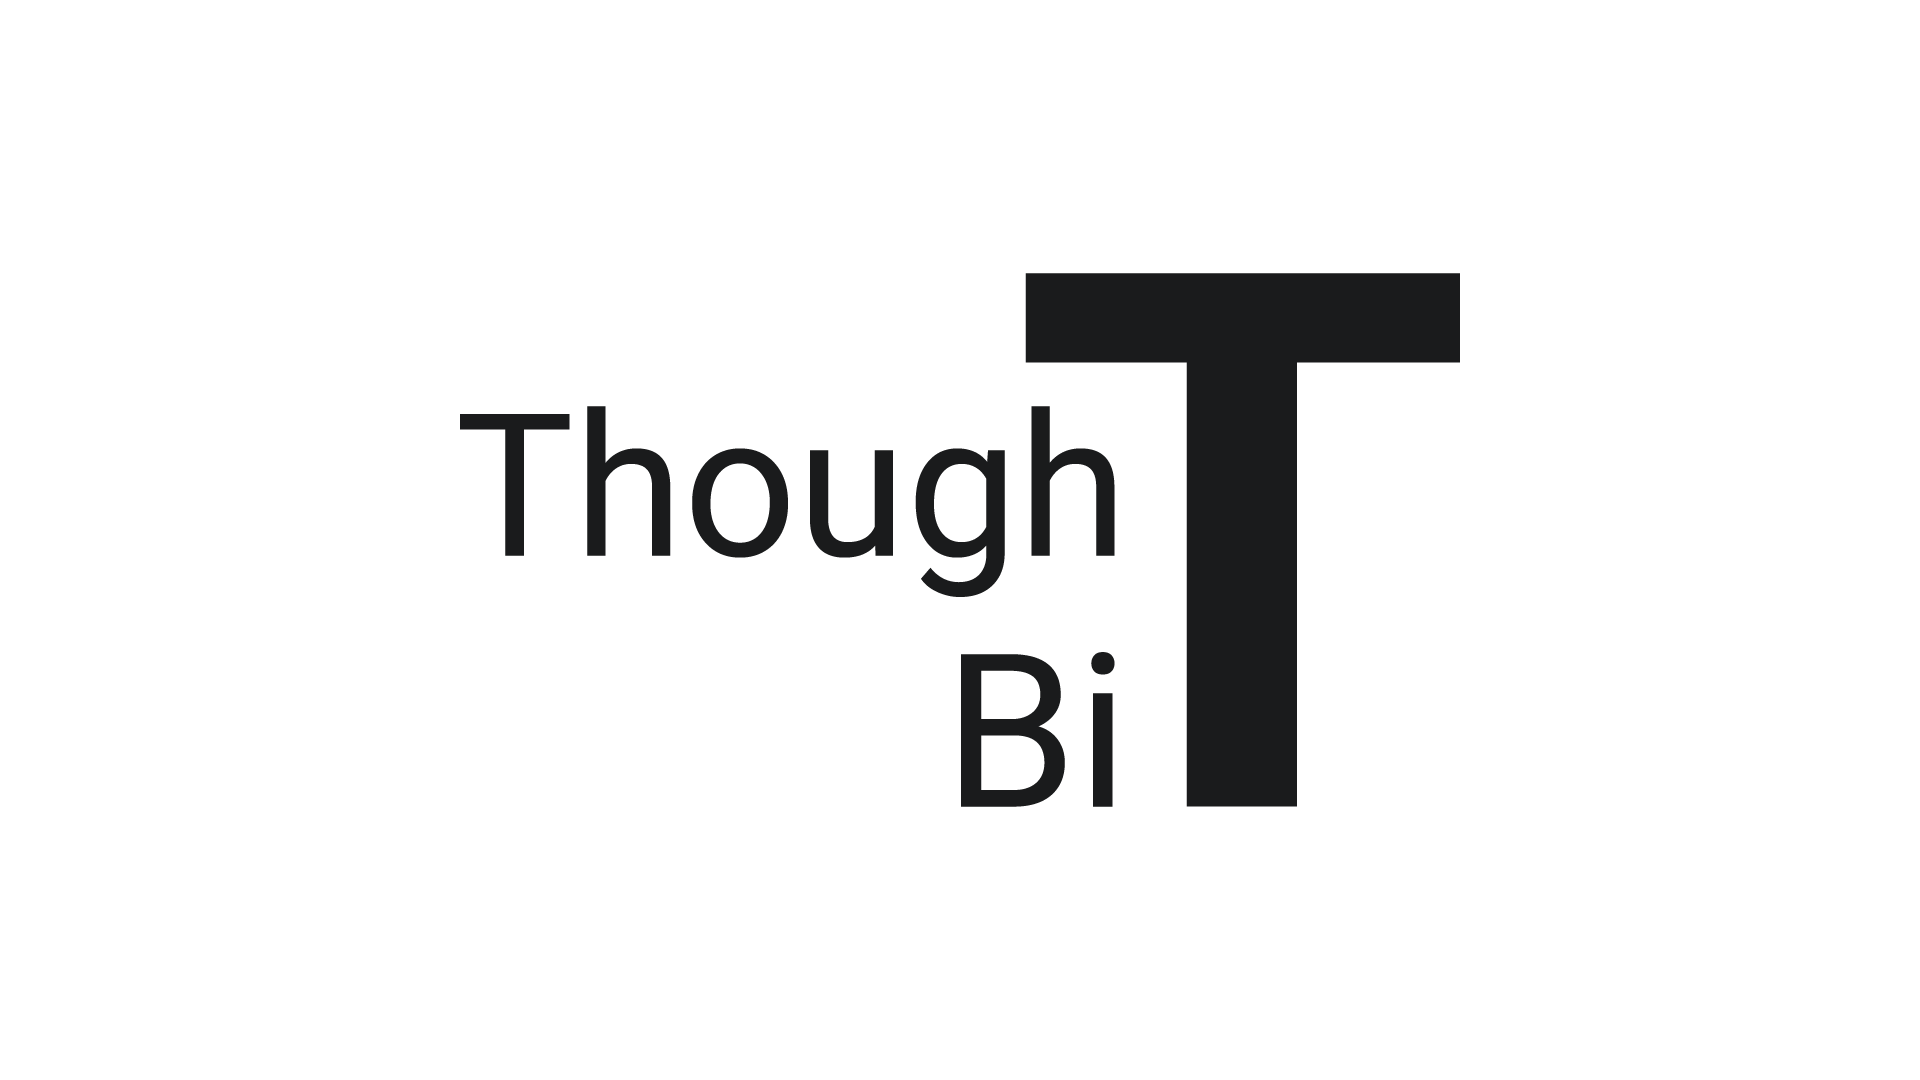 ThoughtBit